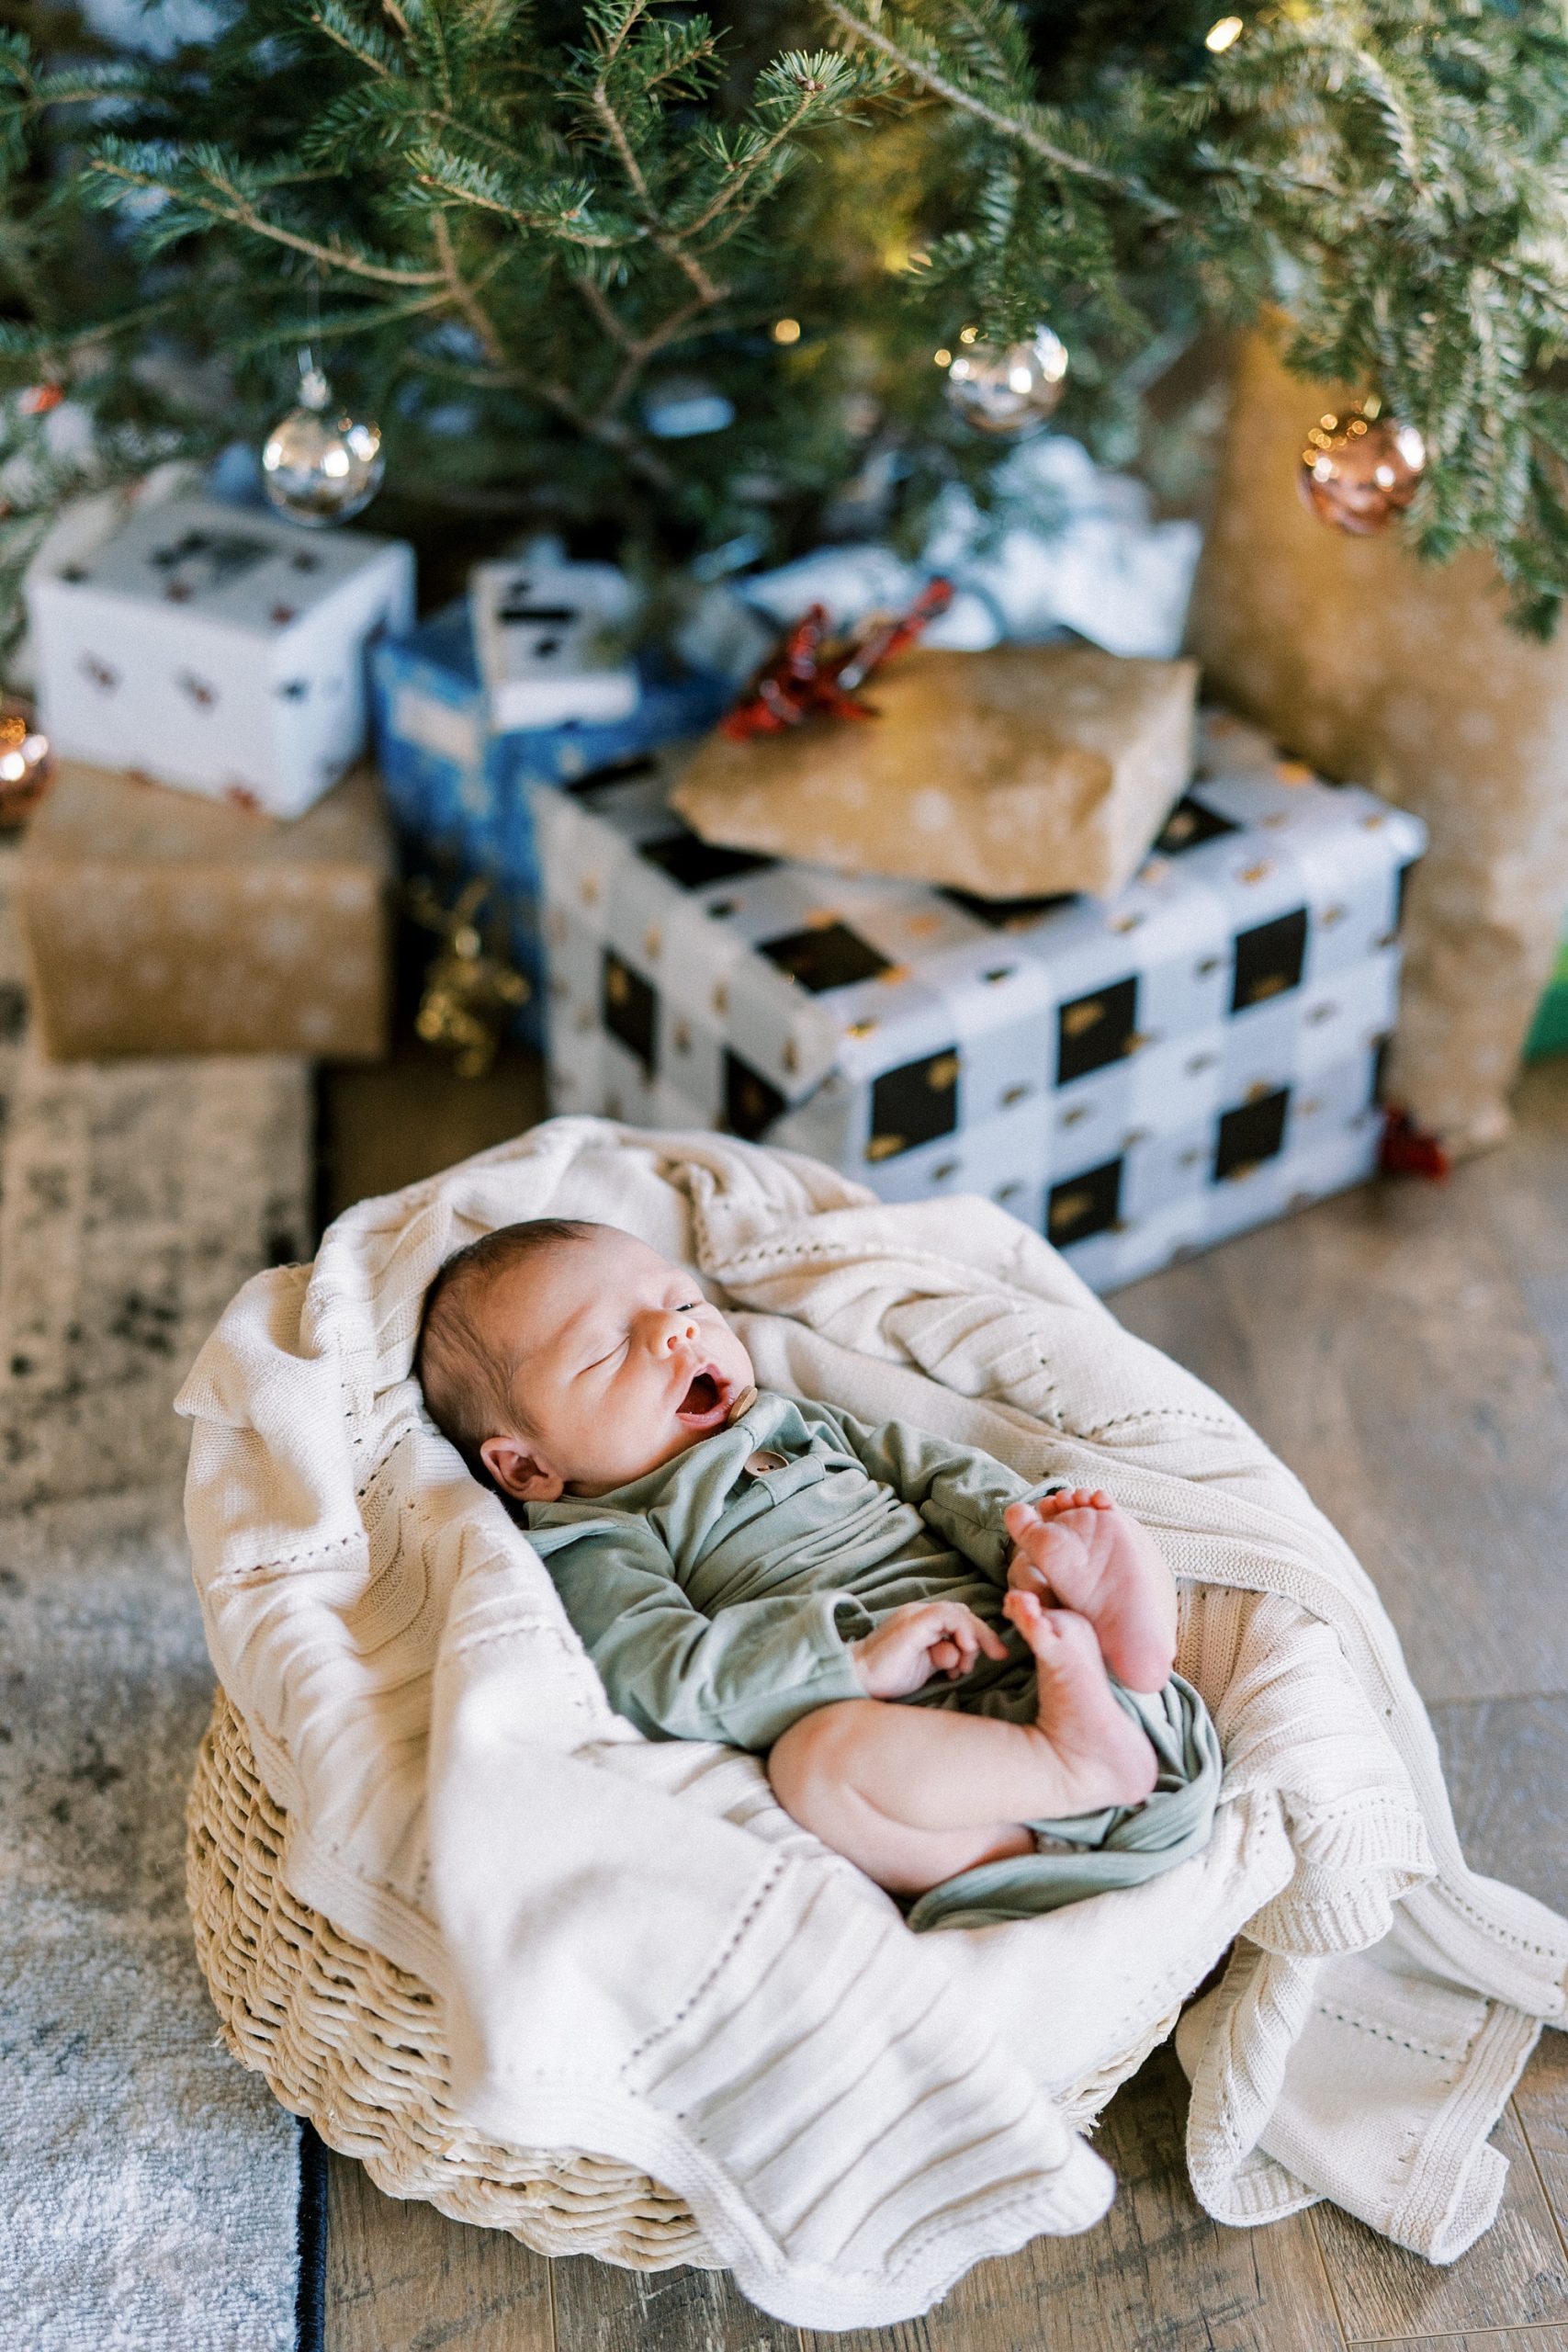 newborn baby boy sleeps in basket by Christmas tree